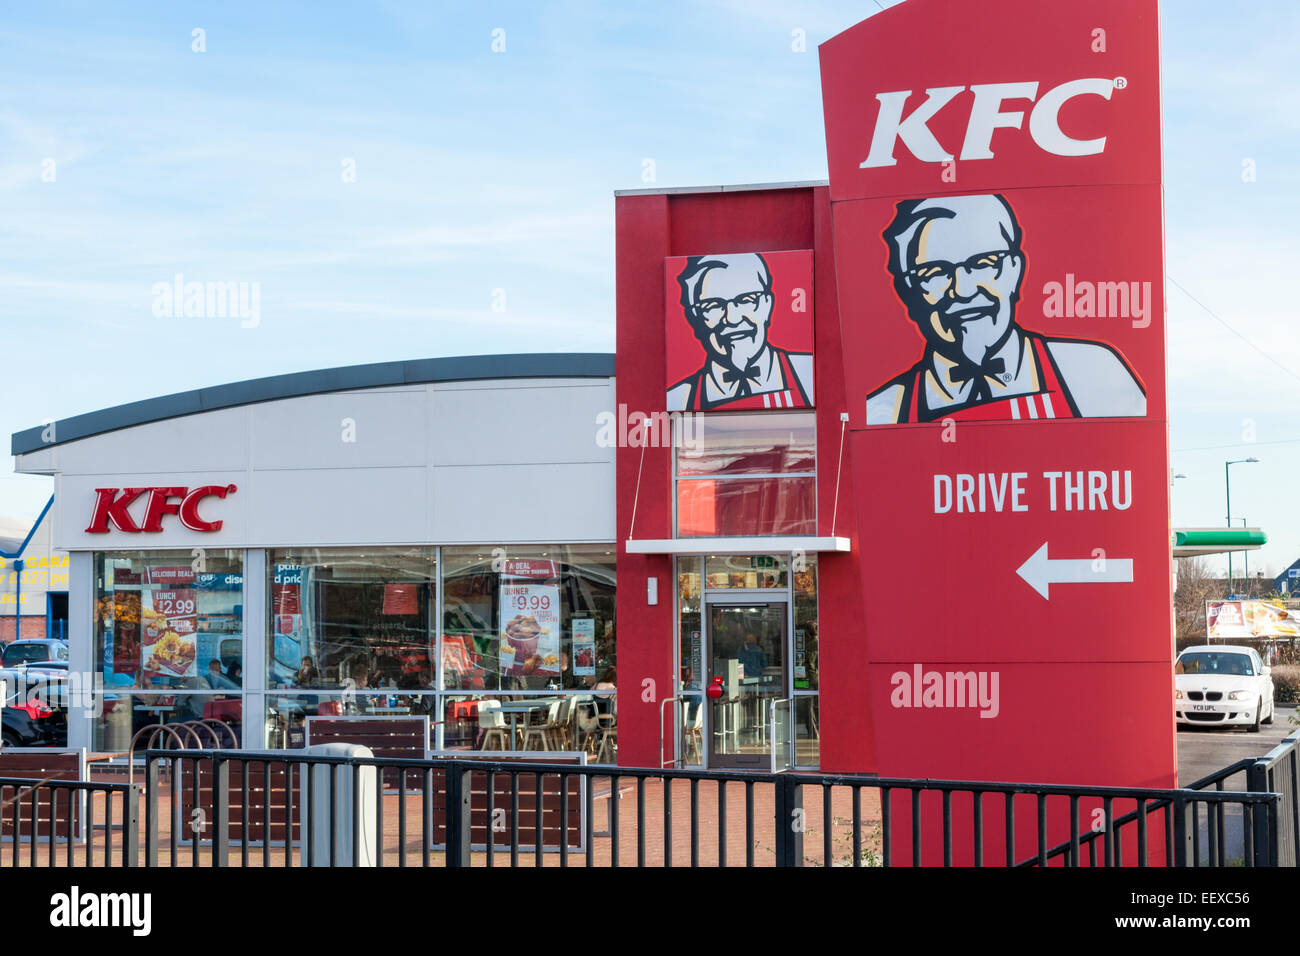 KFC Drive Thru restaurant, Nottingham, England, UK Stock Photo - Alamy